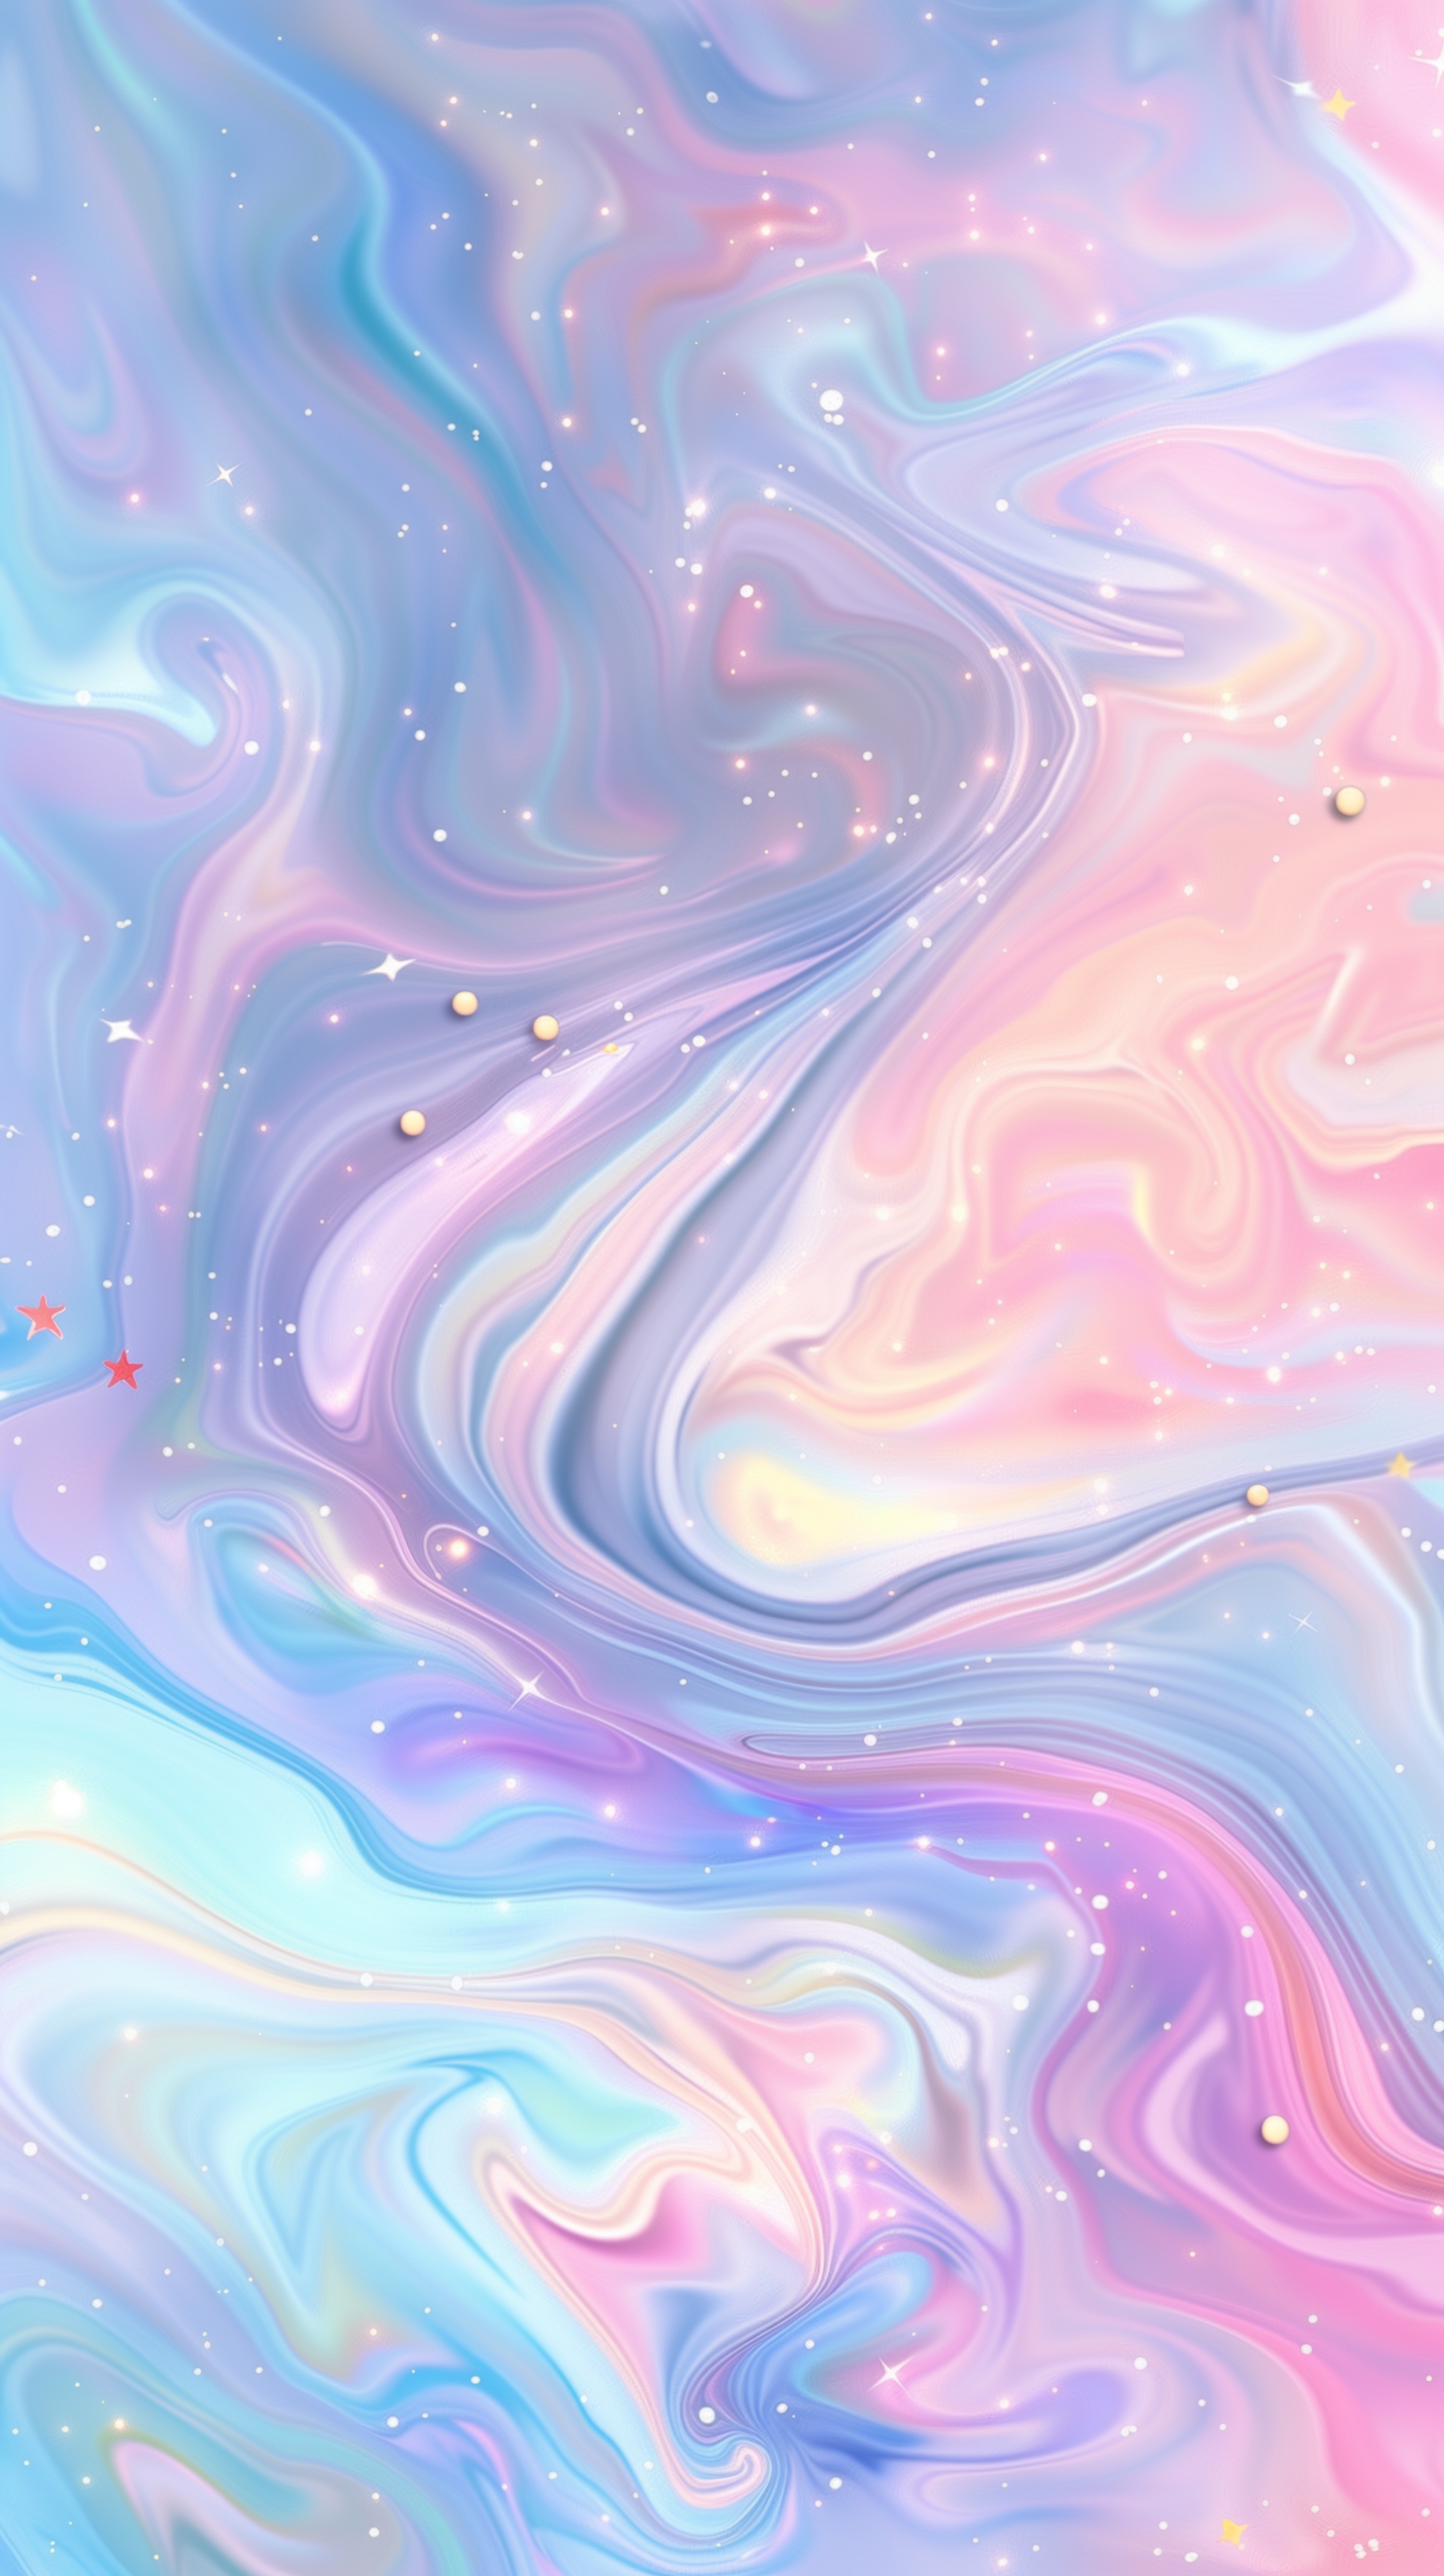 Swirling Pastel Galaxy with Stars Tapetai[58935a042c3f47169f40]